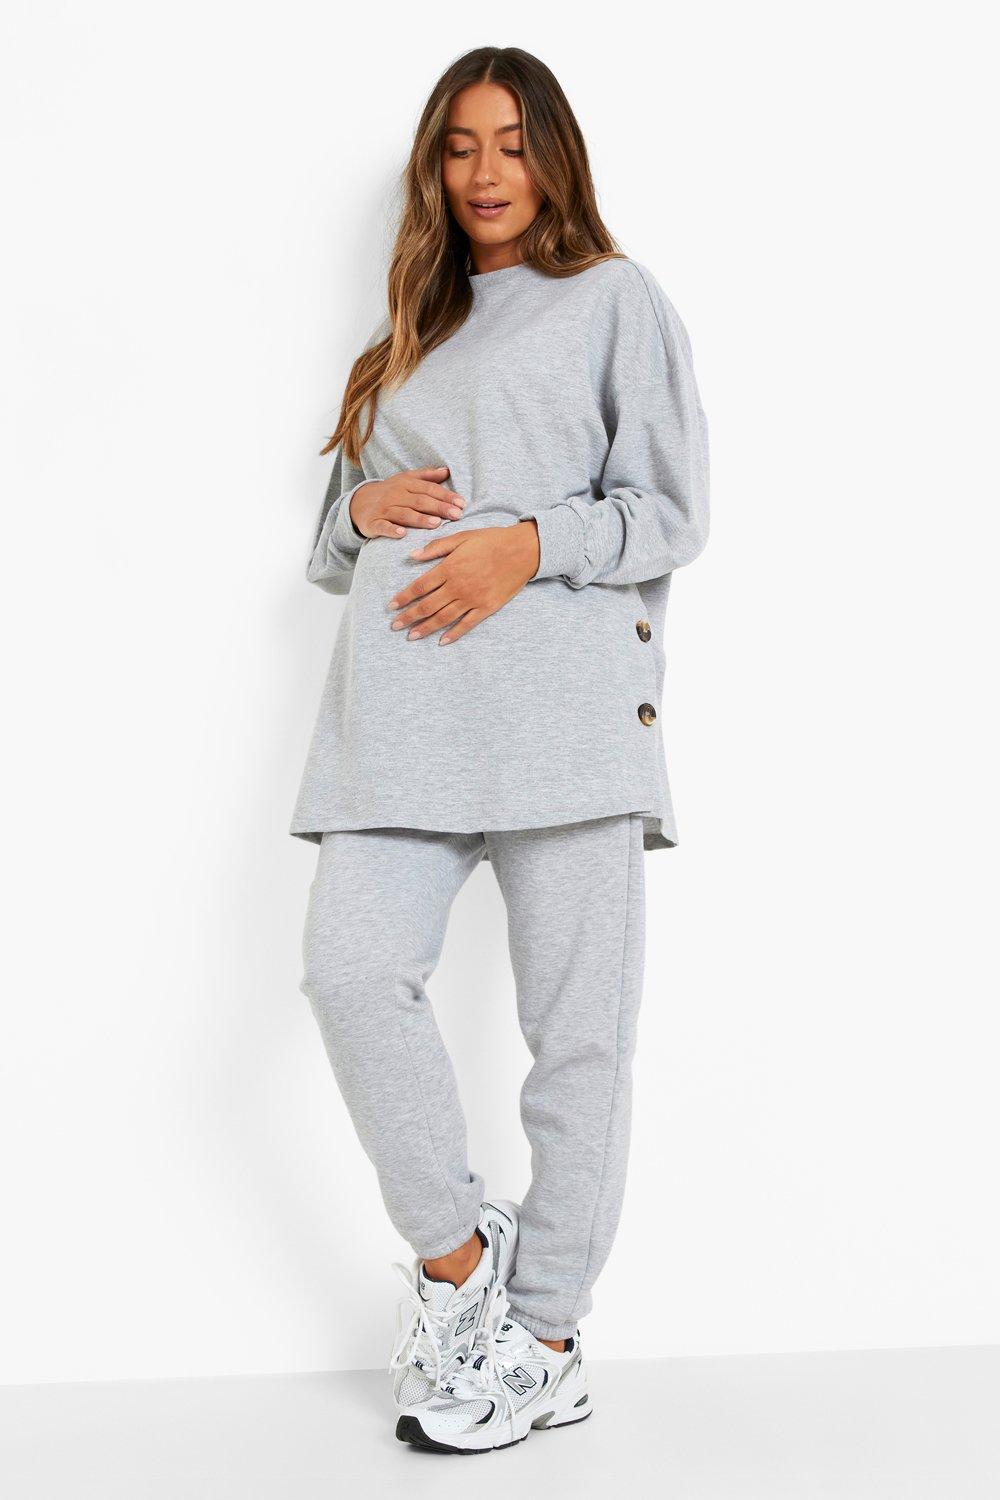 https://media.boohoo.com/i/boohoo/fzz24856_grey%20marl_xl_2/female-grey%20marl-maternity-side-button-nursing-sweatshirt